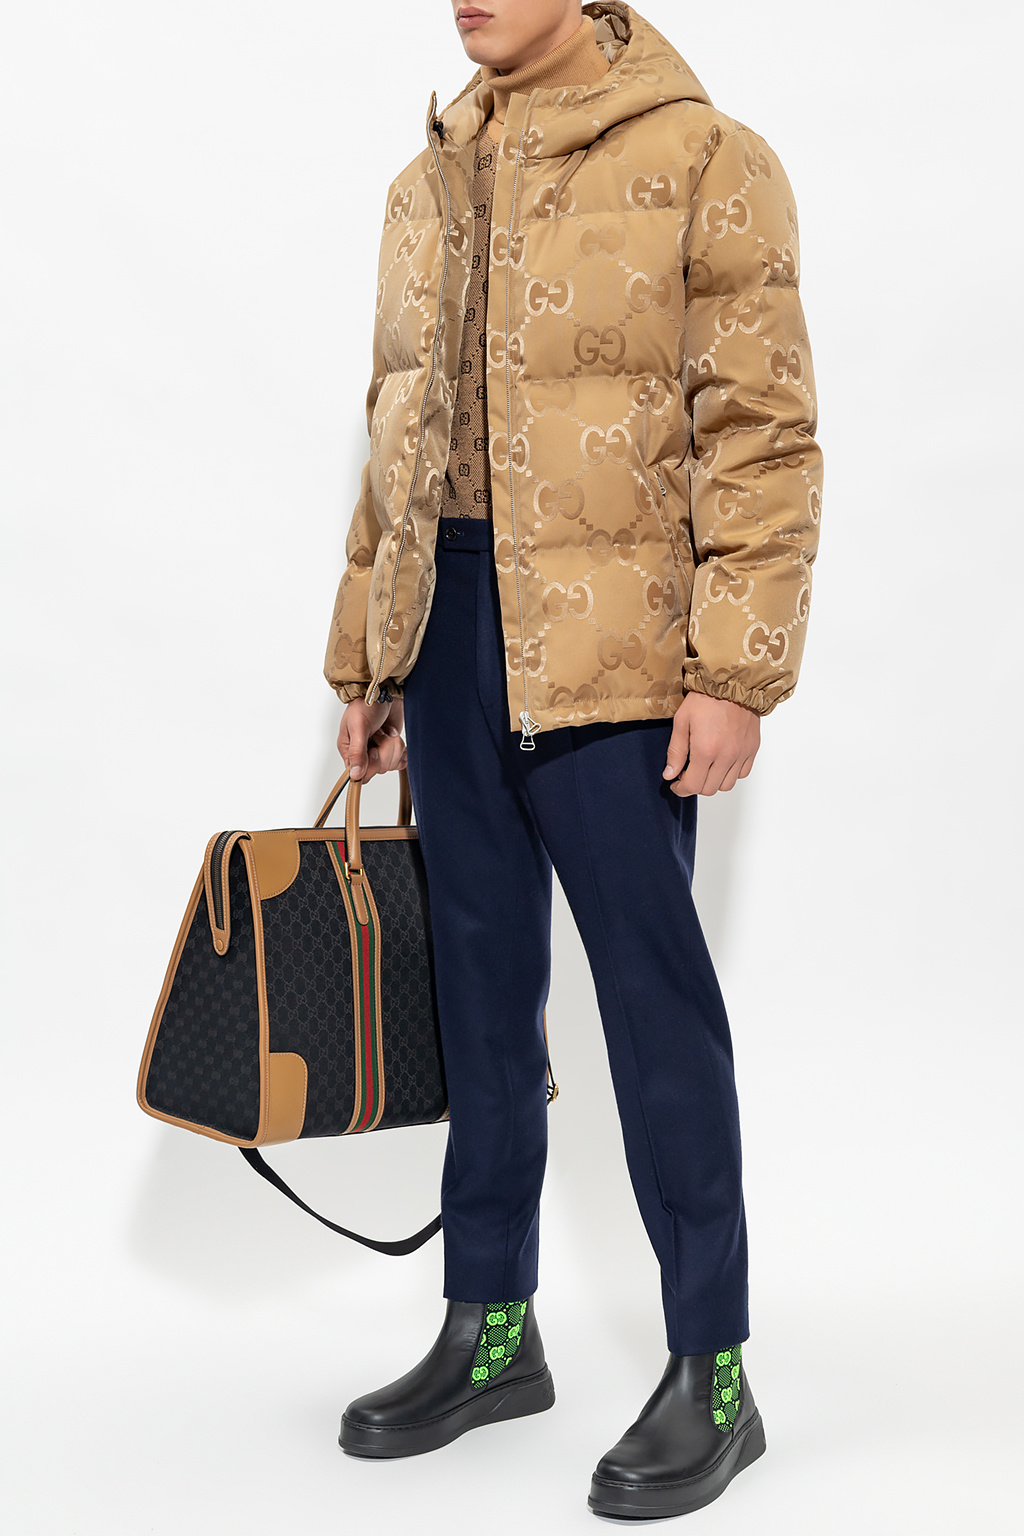 Louis Vuitton Men's Monogram Down Jacket